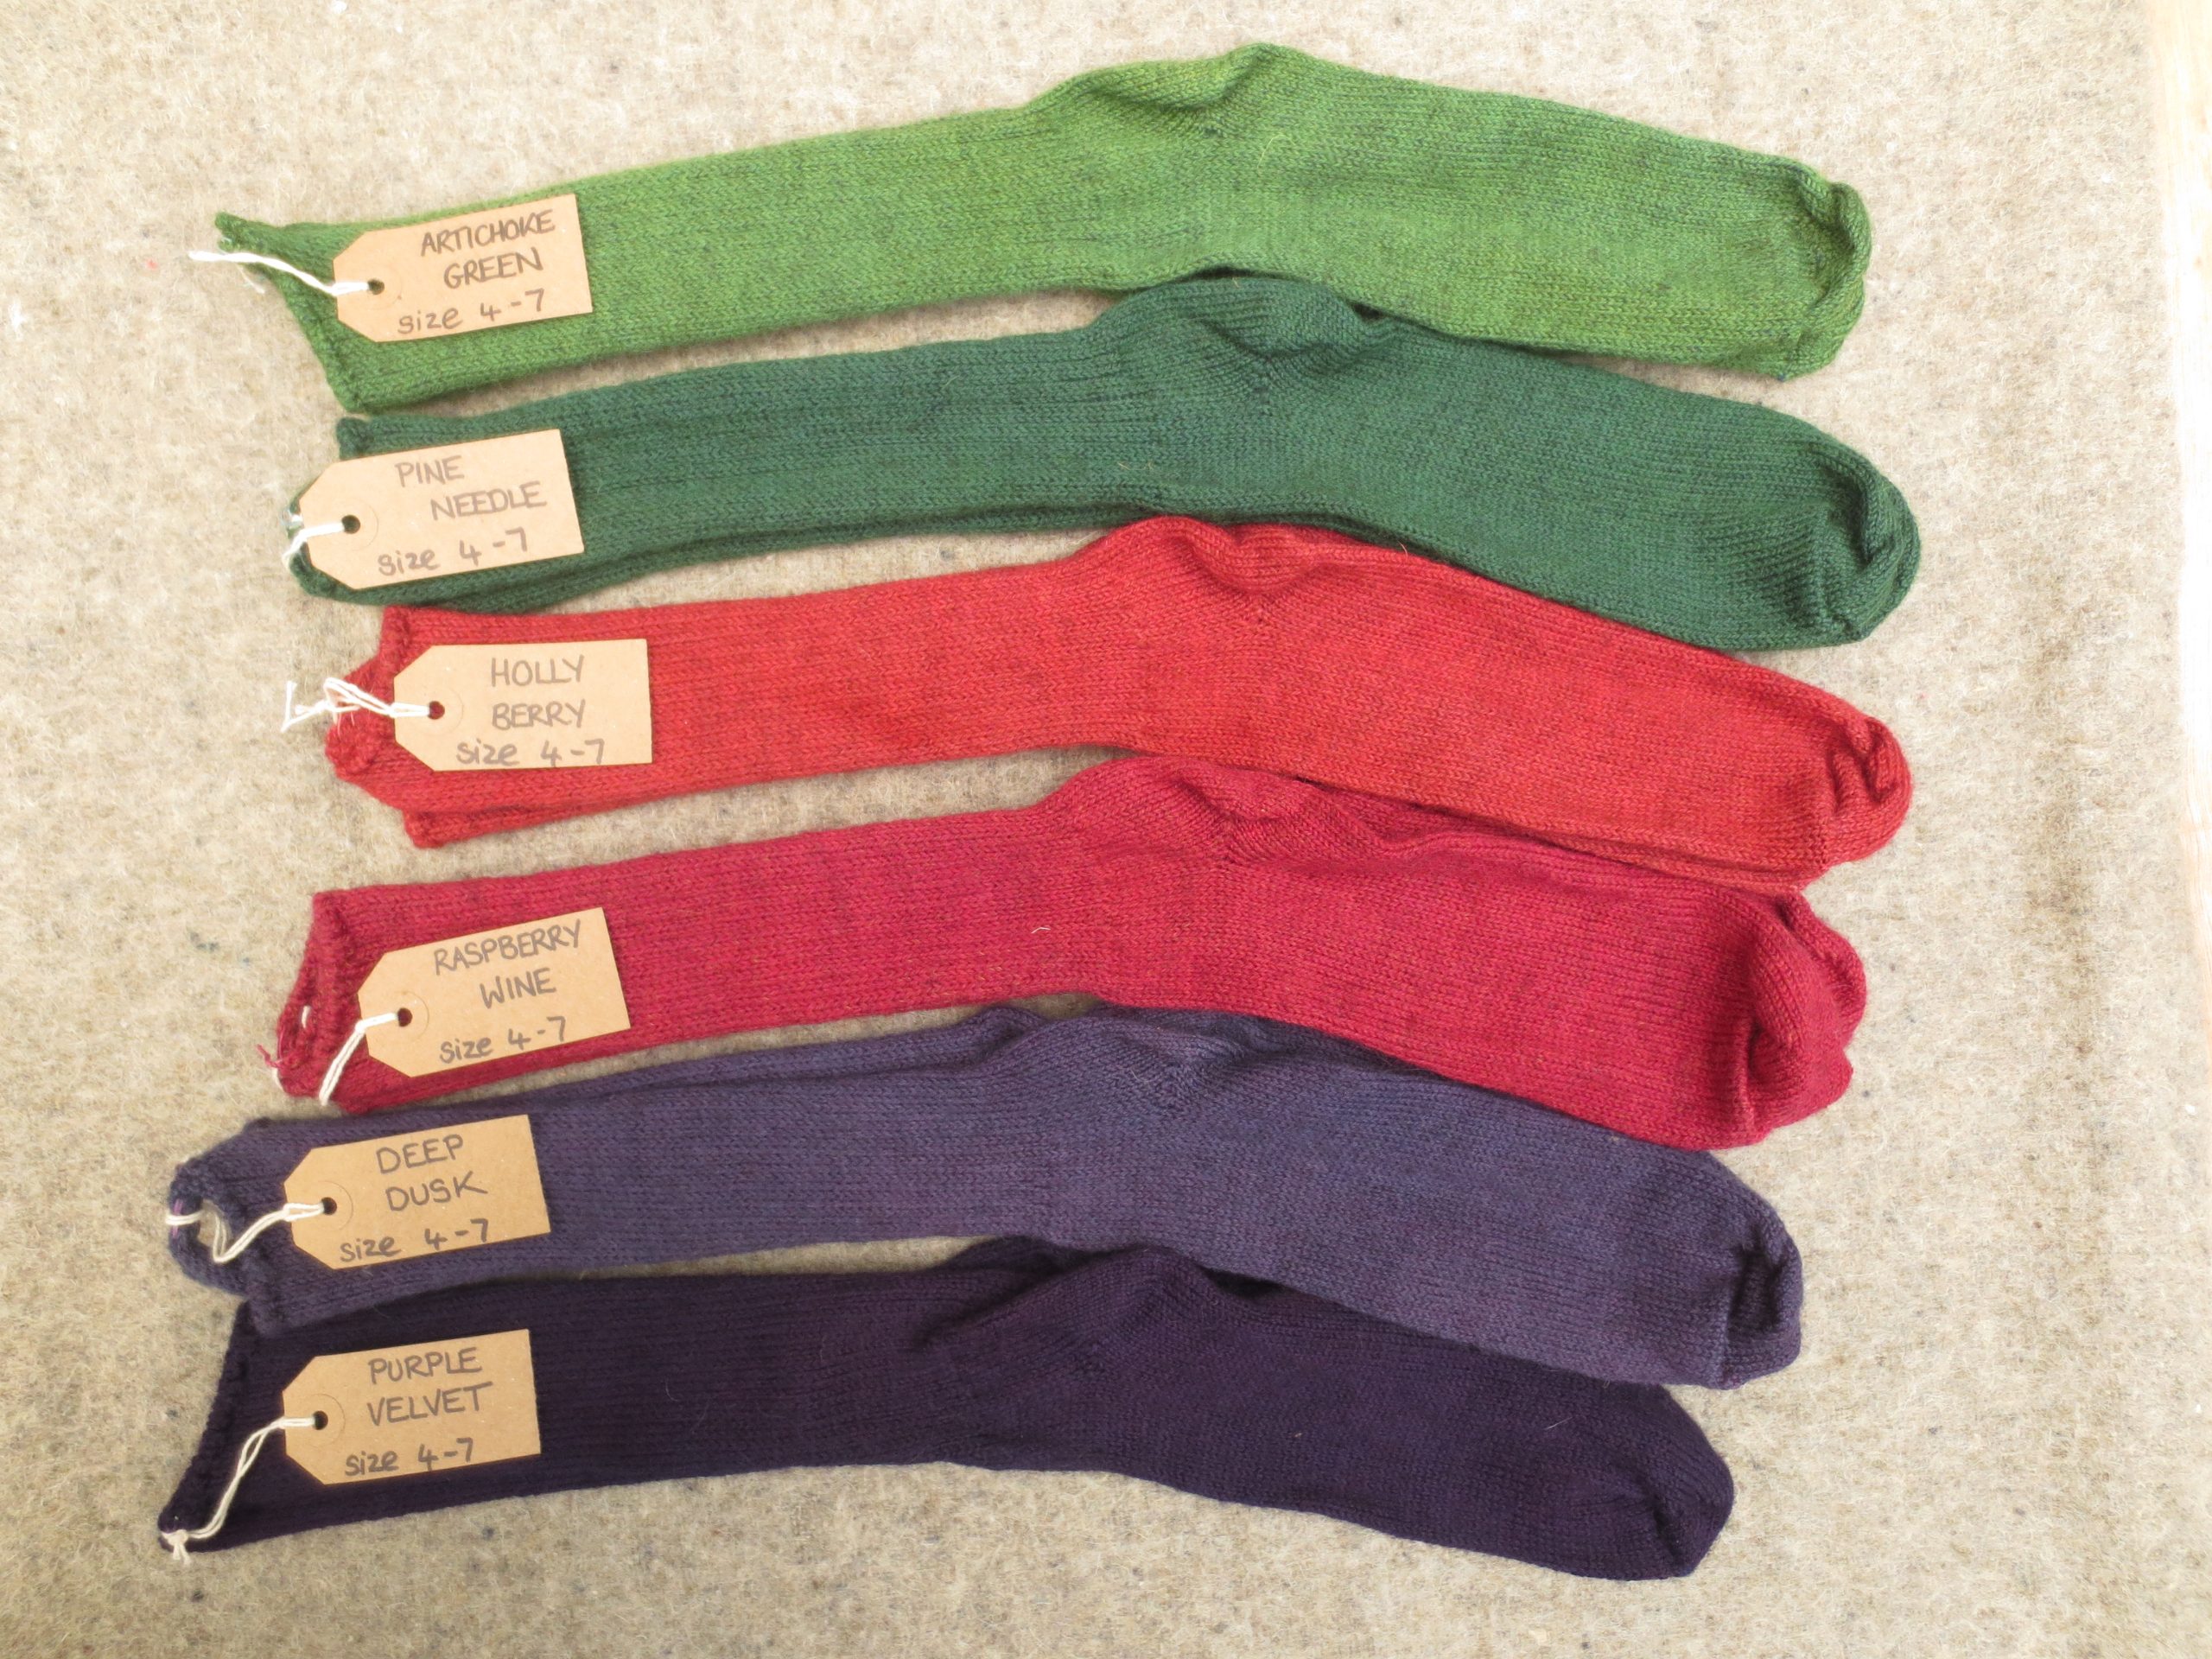 Size 4-7 Exmoor Socks - plant dyed everyday British wool socks